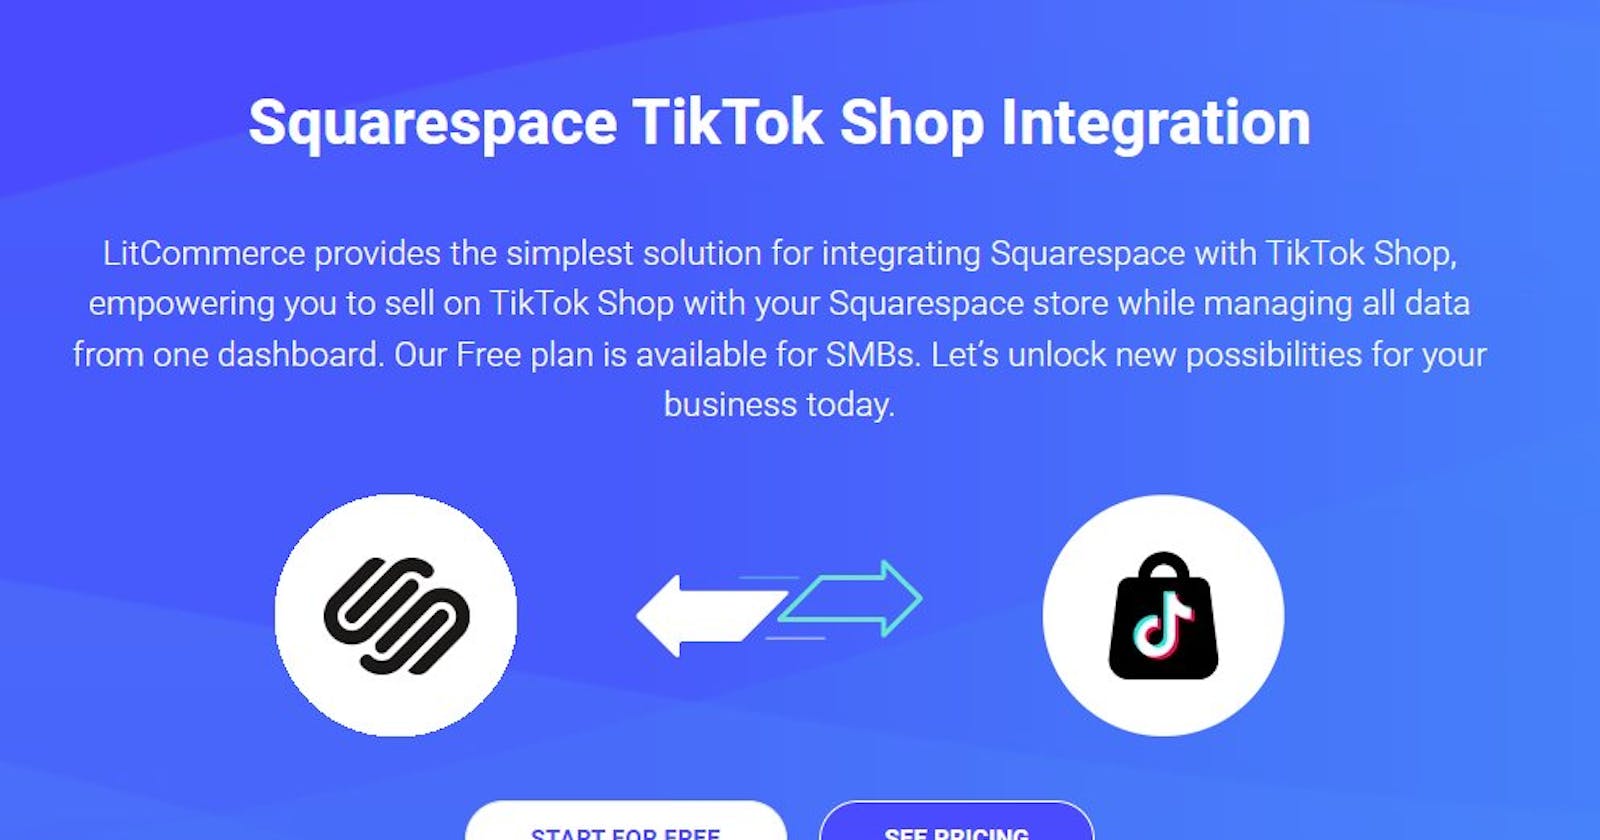 How to Integrate TikTok Shop with Squarespace